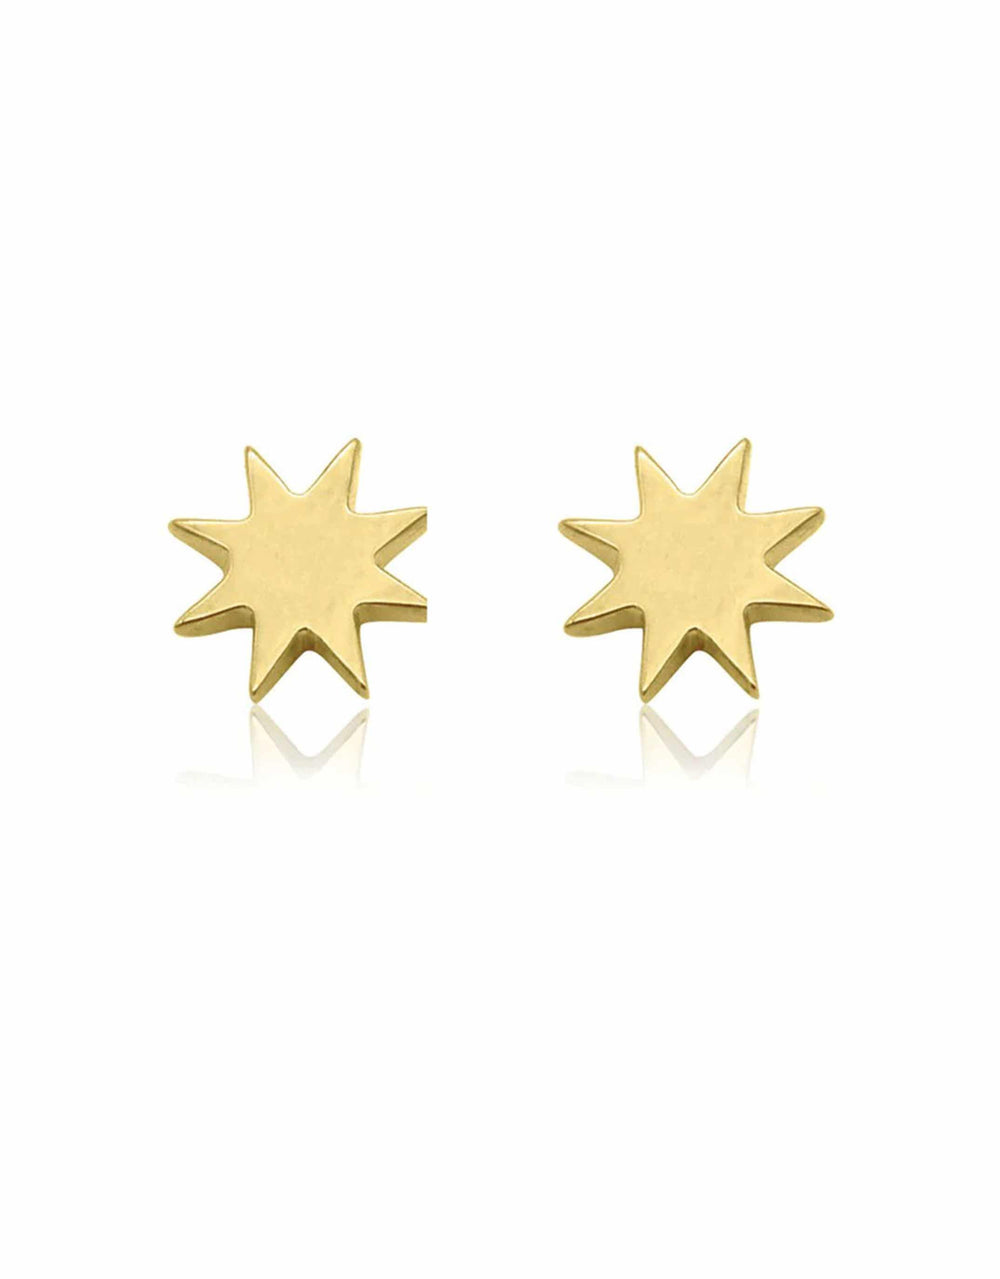 Linda Tahija Jewellery - Sol Stud Earrings - Gold - White & Co Living Accessories